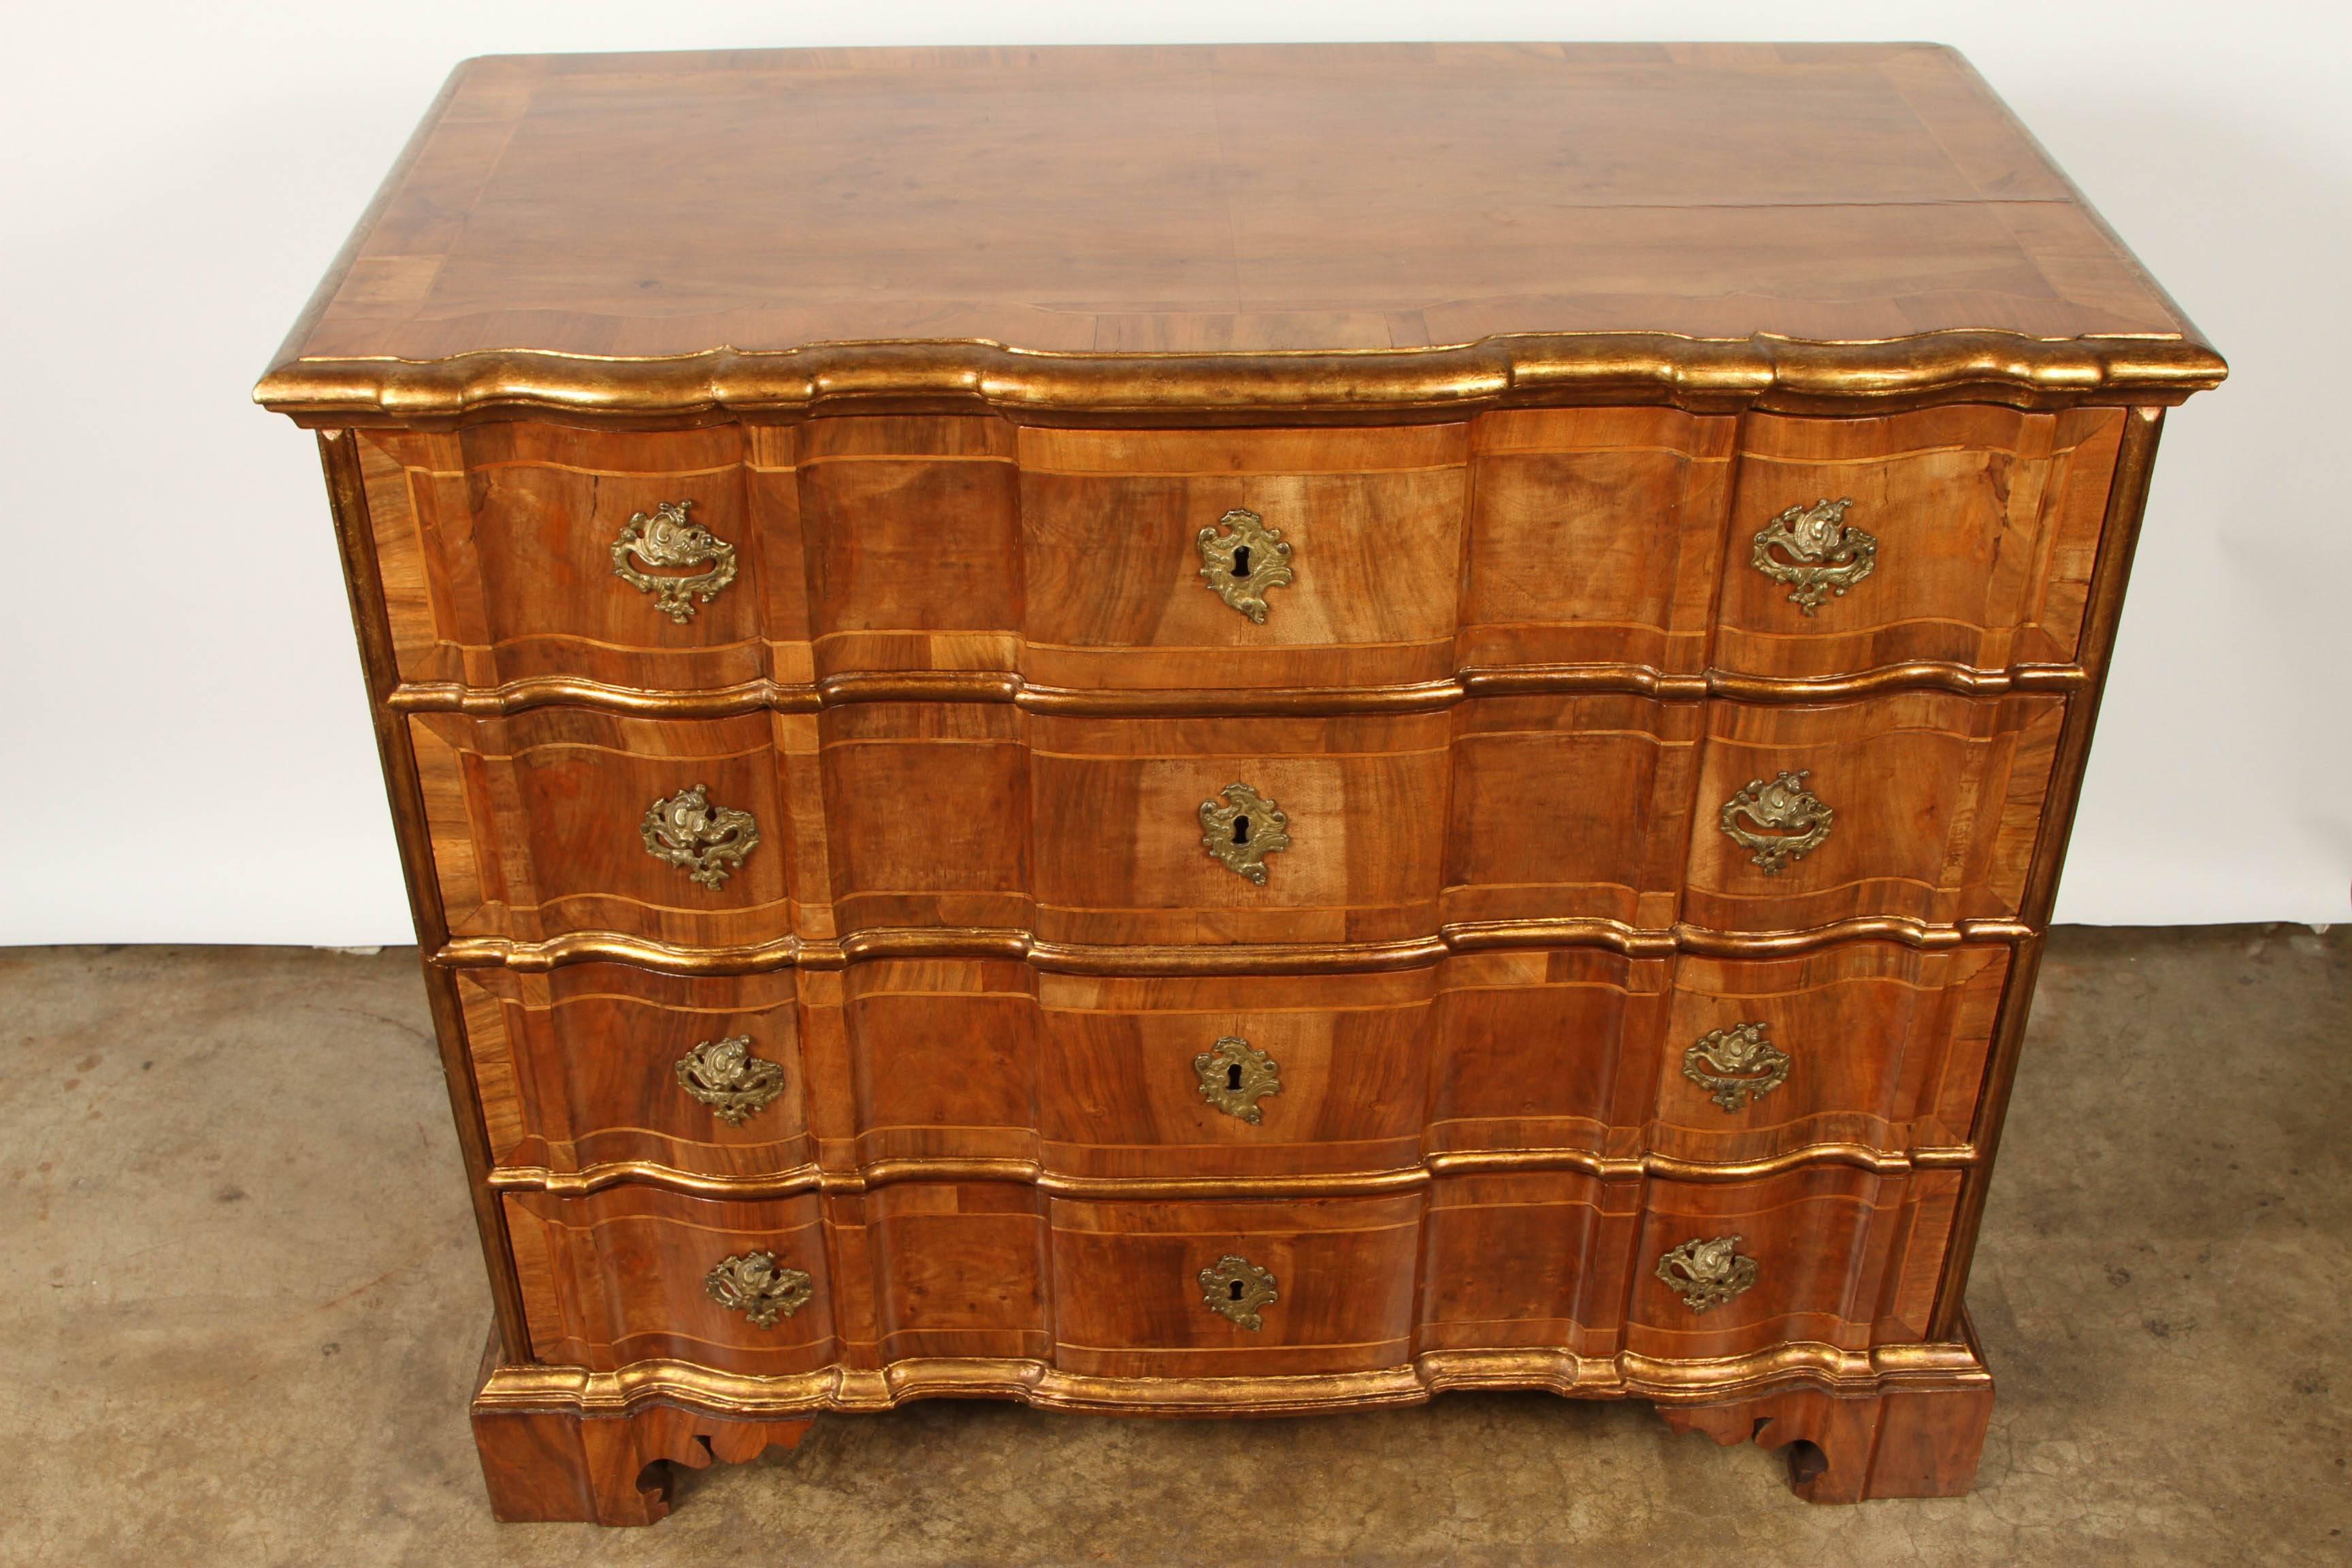 Walnut Danish Rococo chest of drawers with key